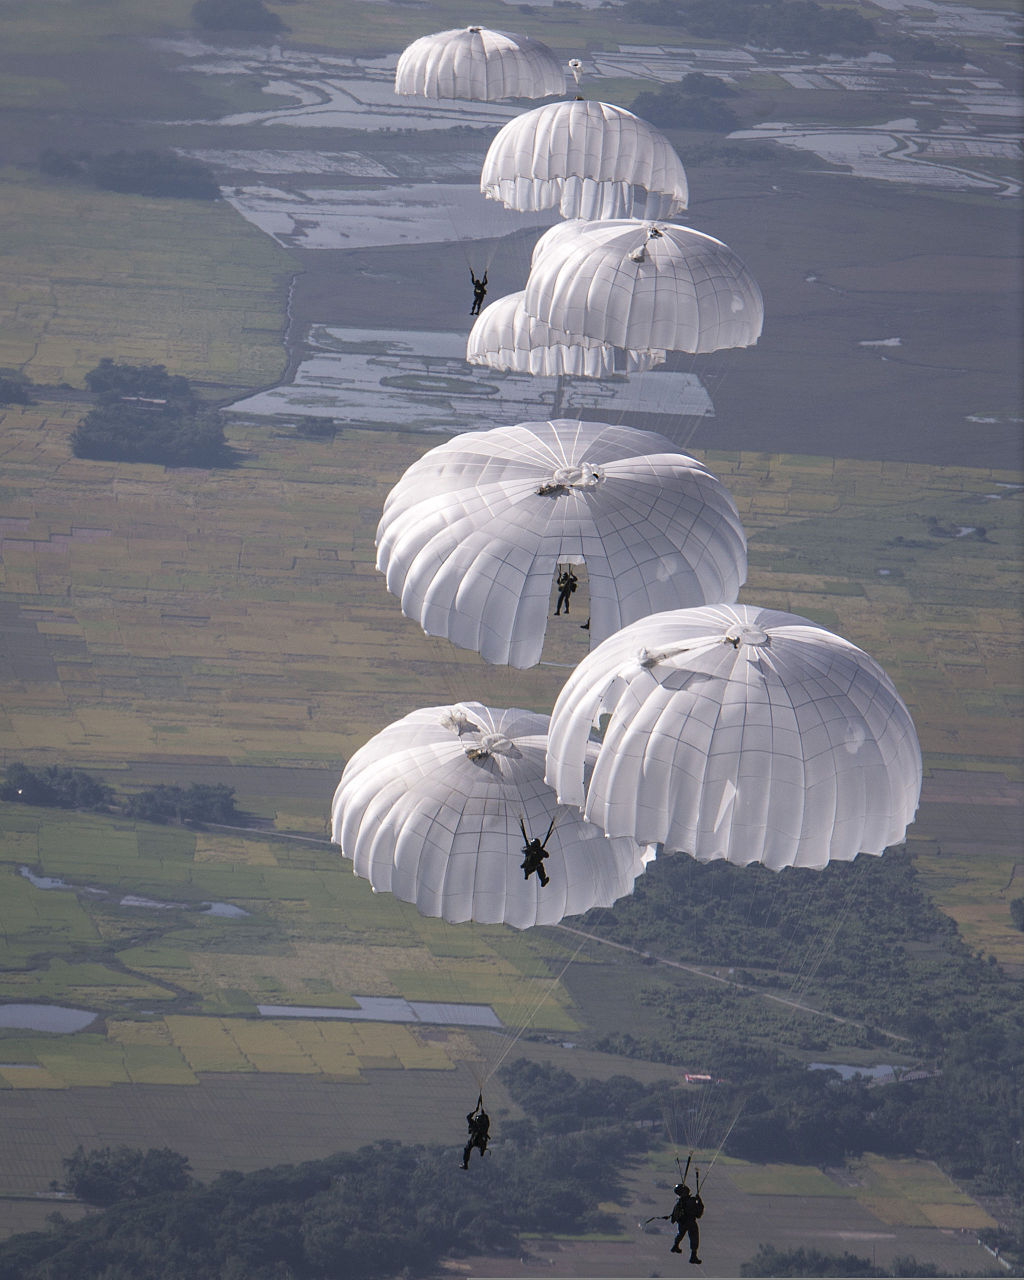 Parachute descending into a body of water.